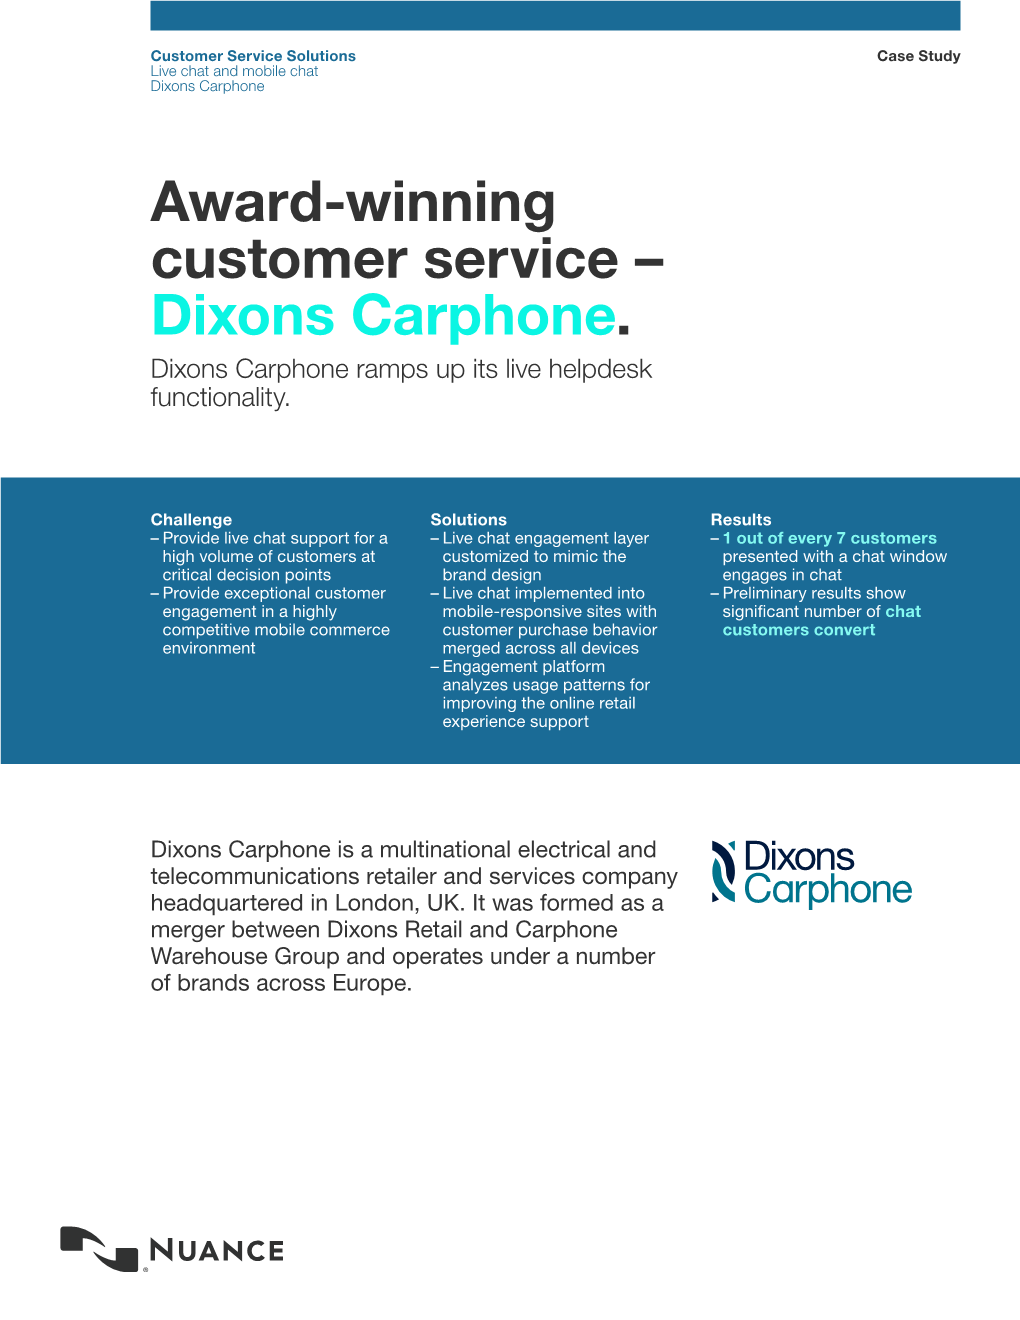 Dixons Carphone Case Study